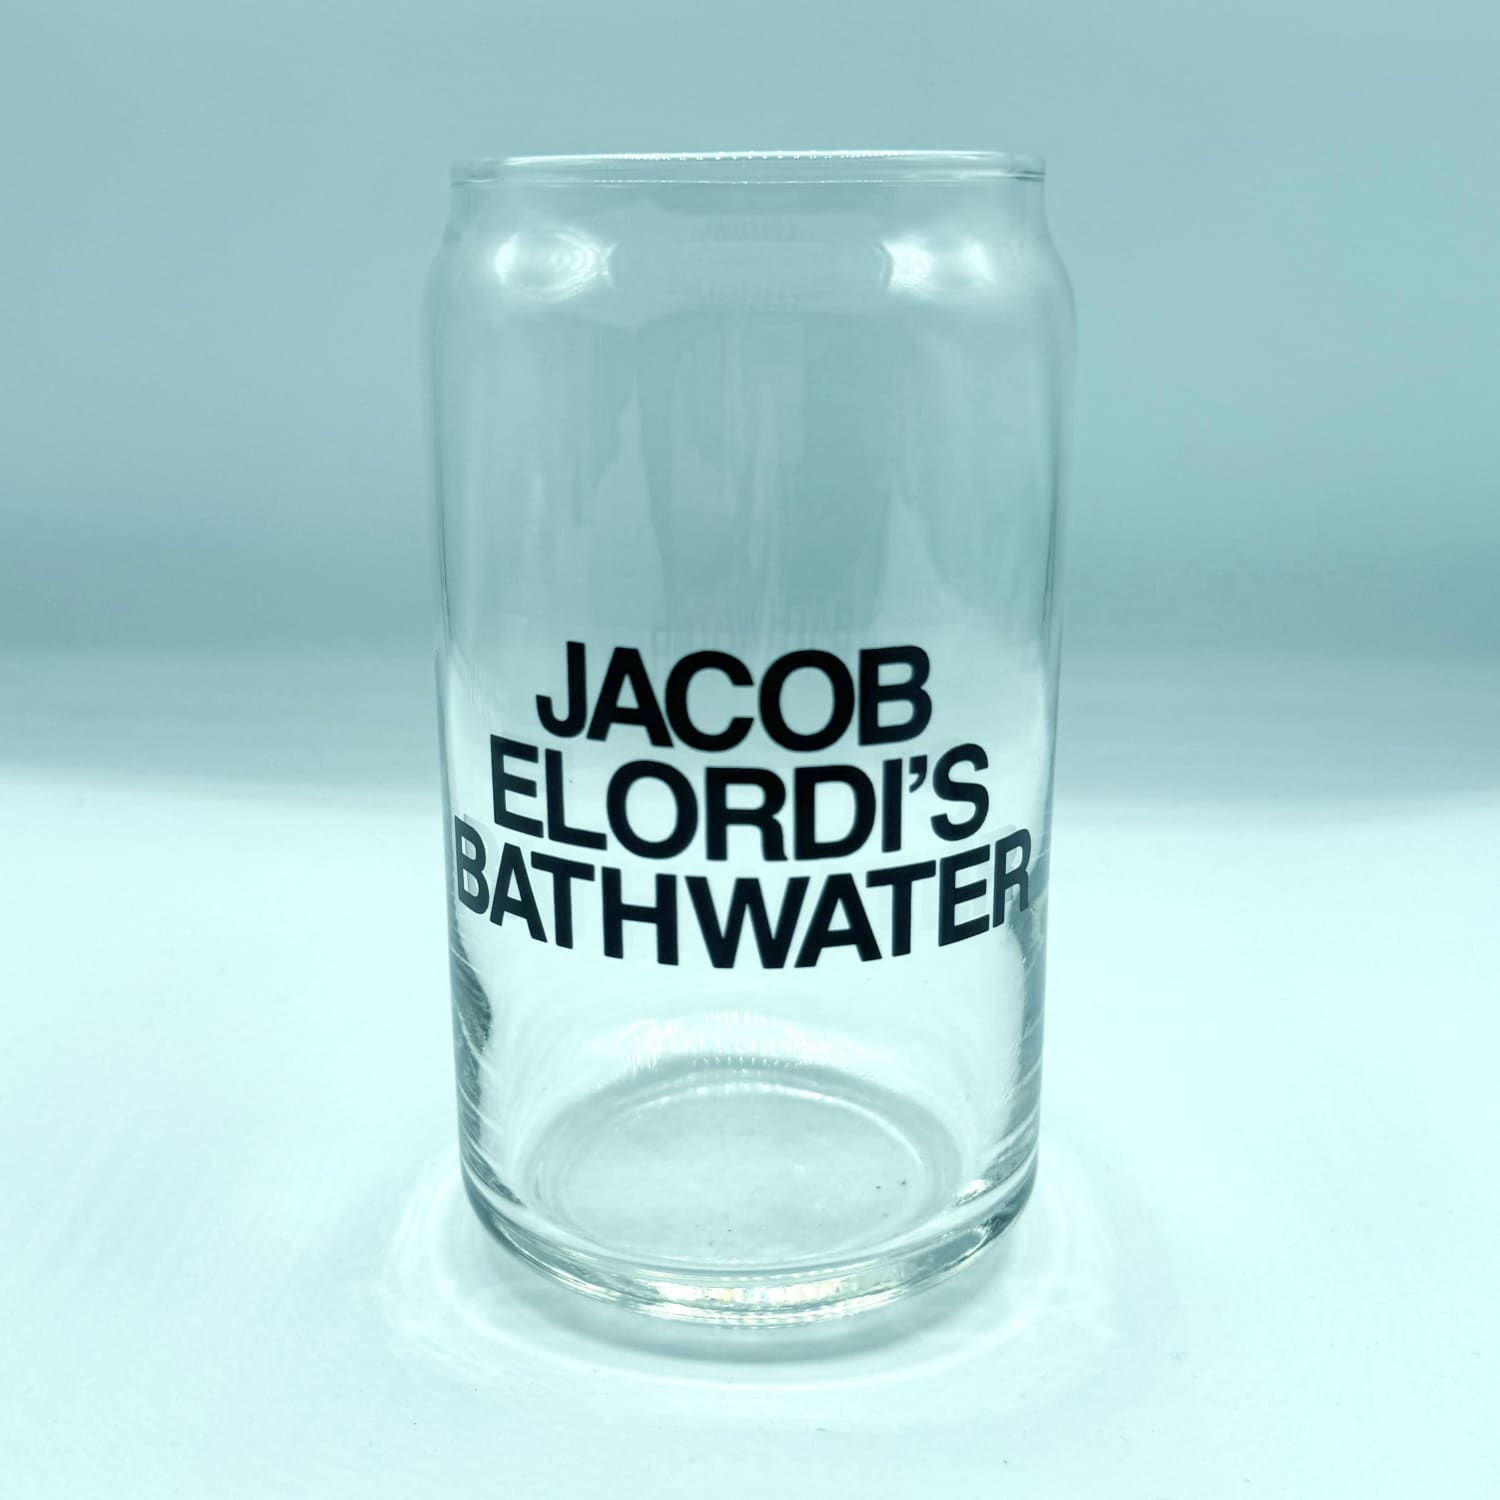 Jacob Elordi’s Bathwater Beer Glass Bathwater - Celeb